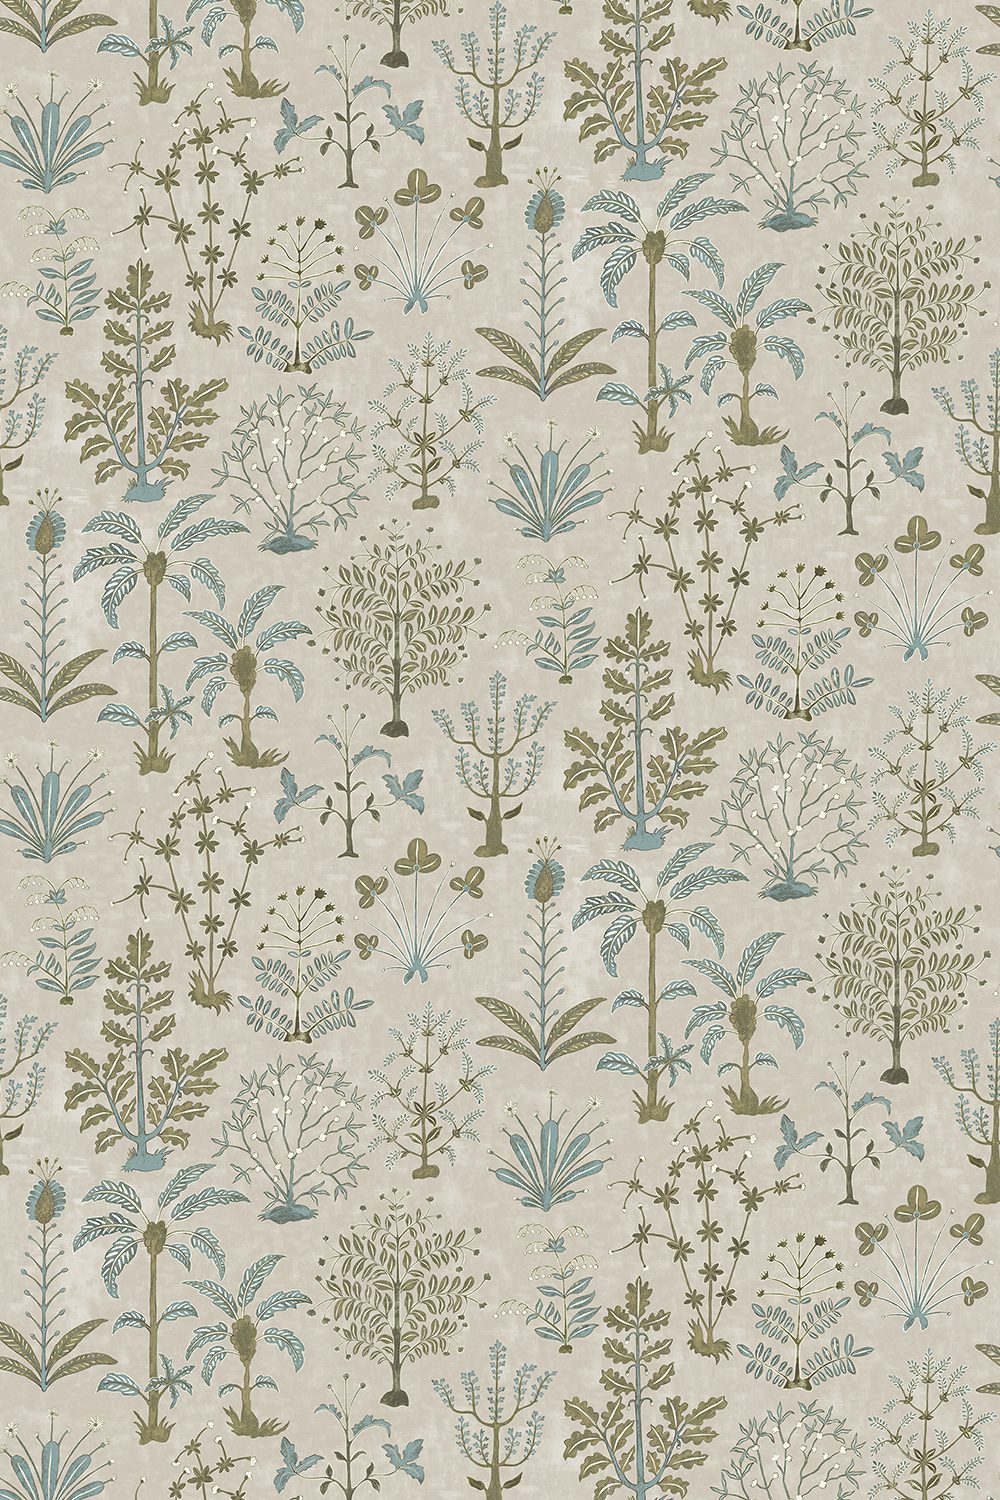 Josephine-munsey-wallpaper-cynthia-tree-soft-design-stone-olive-light-blue-nature-inspired-design